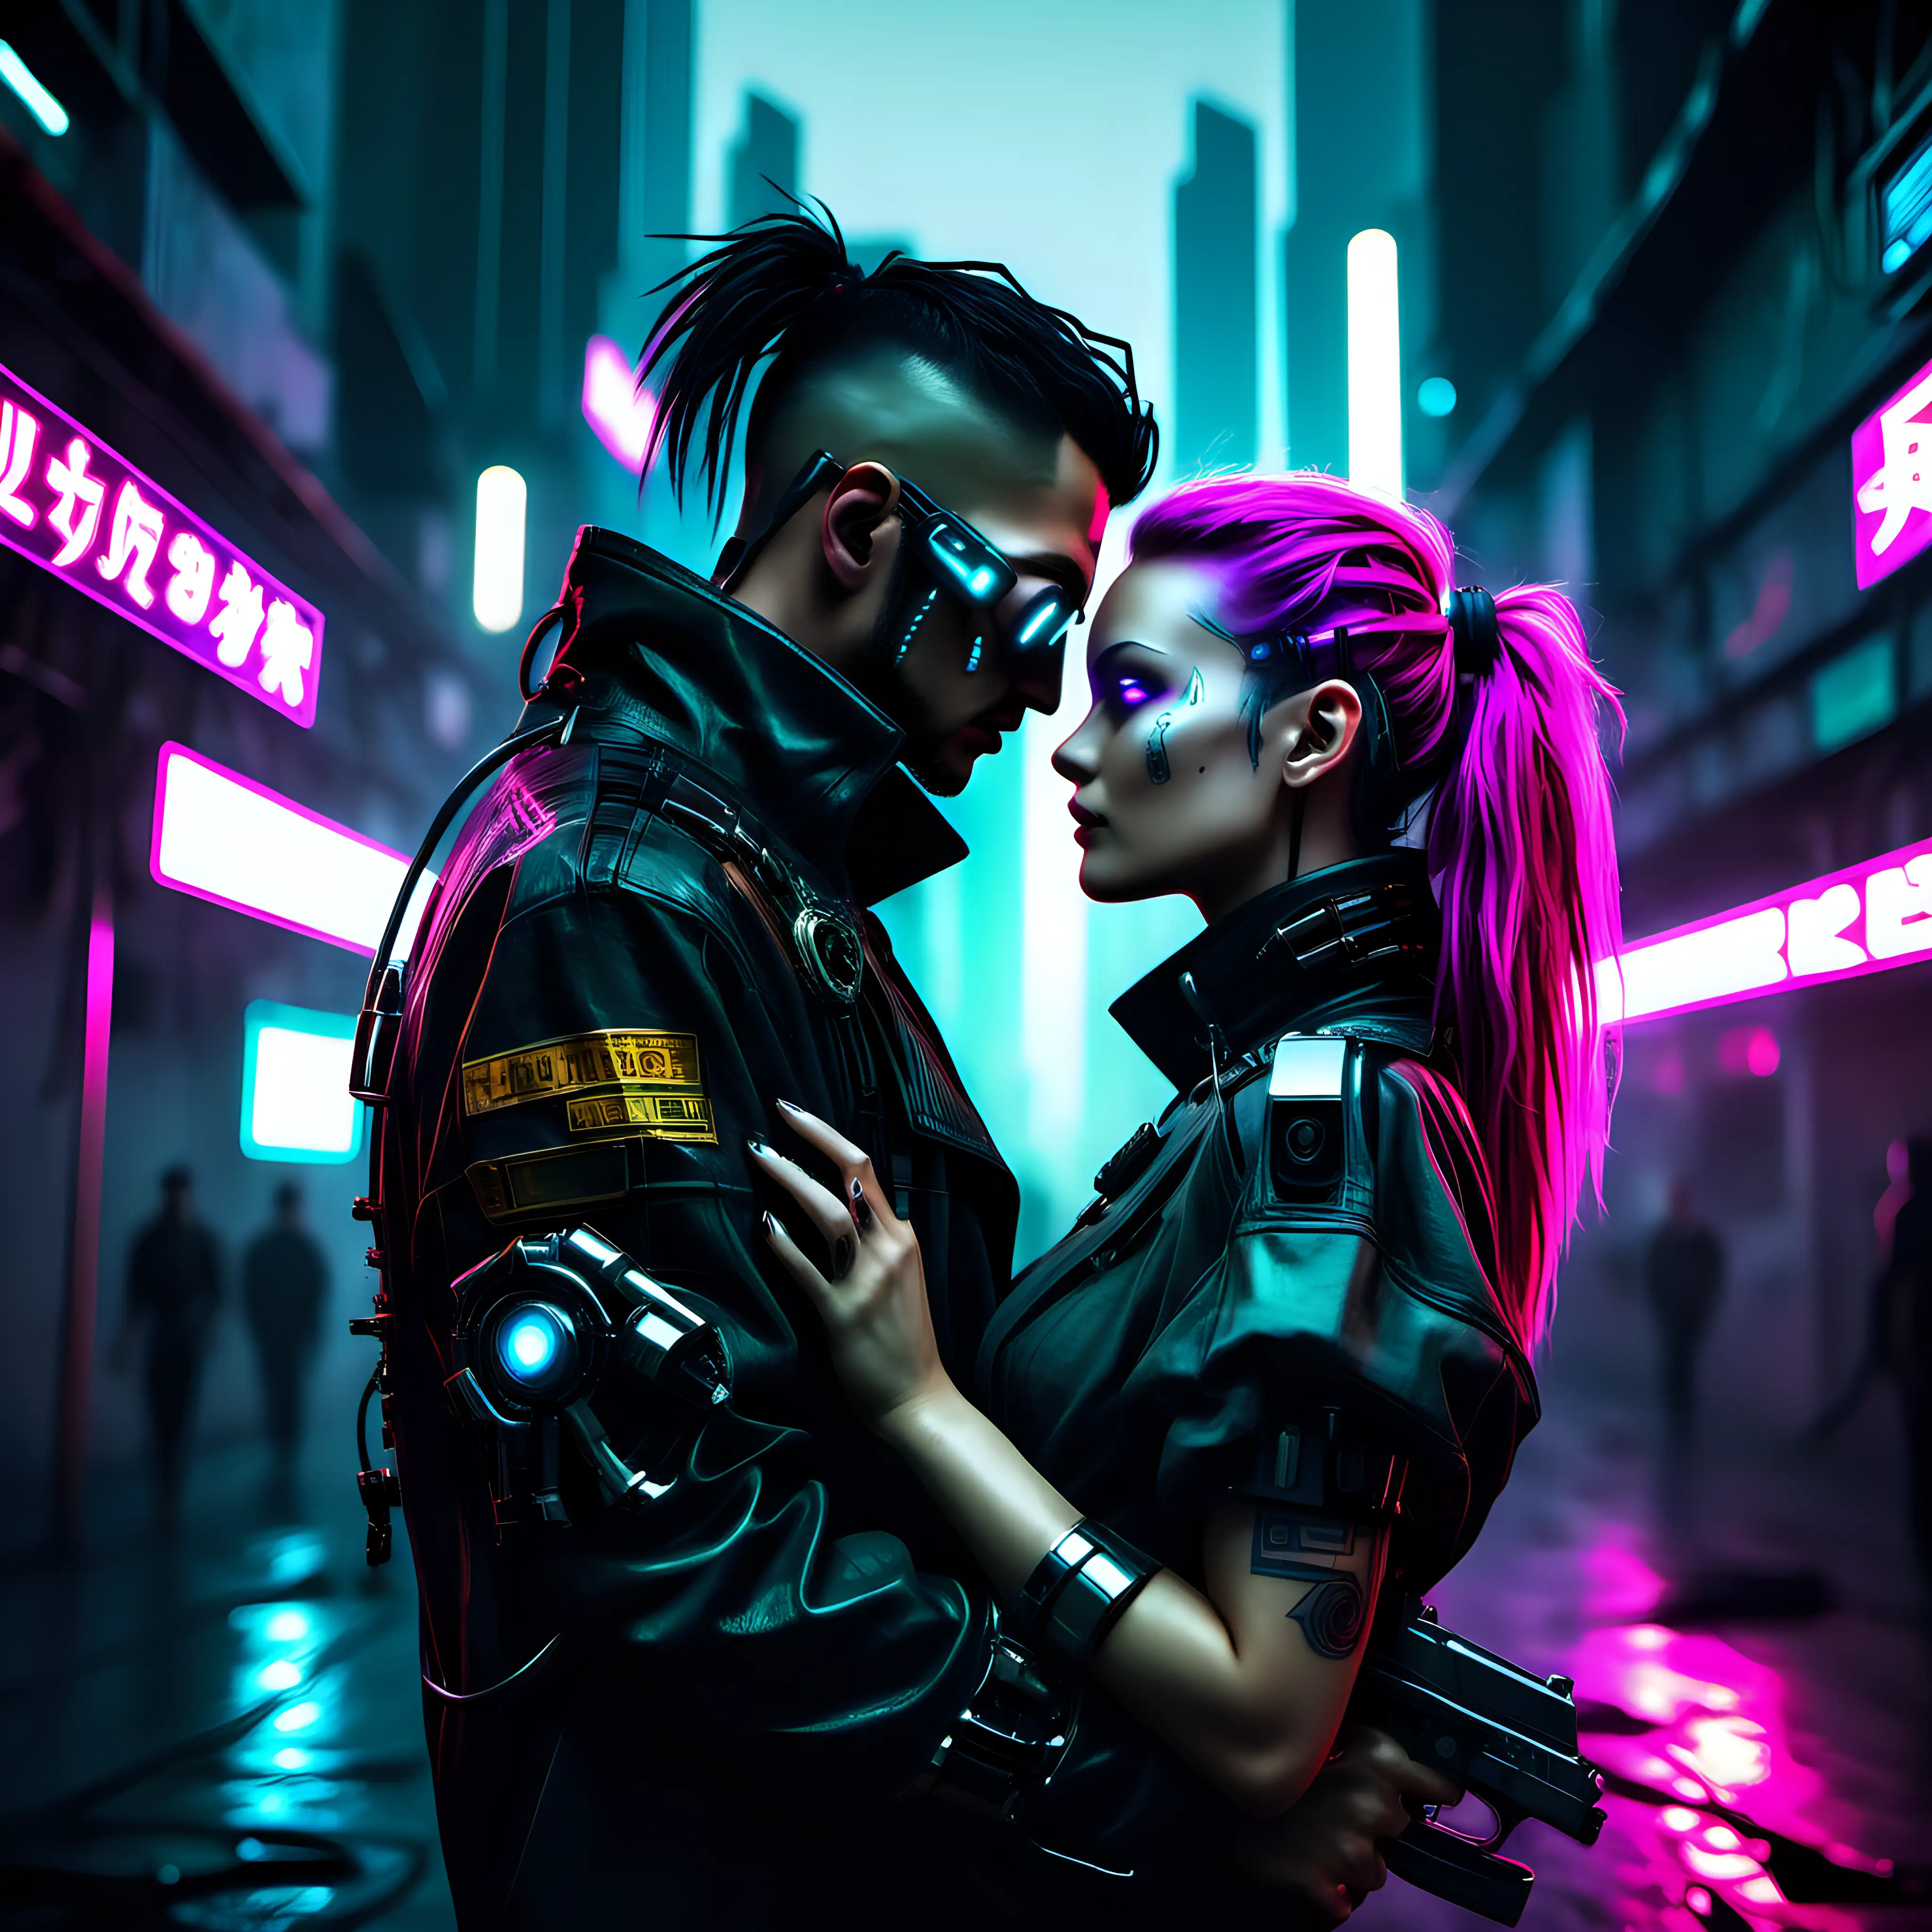 Futuristic Cyberpunk Romance Art